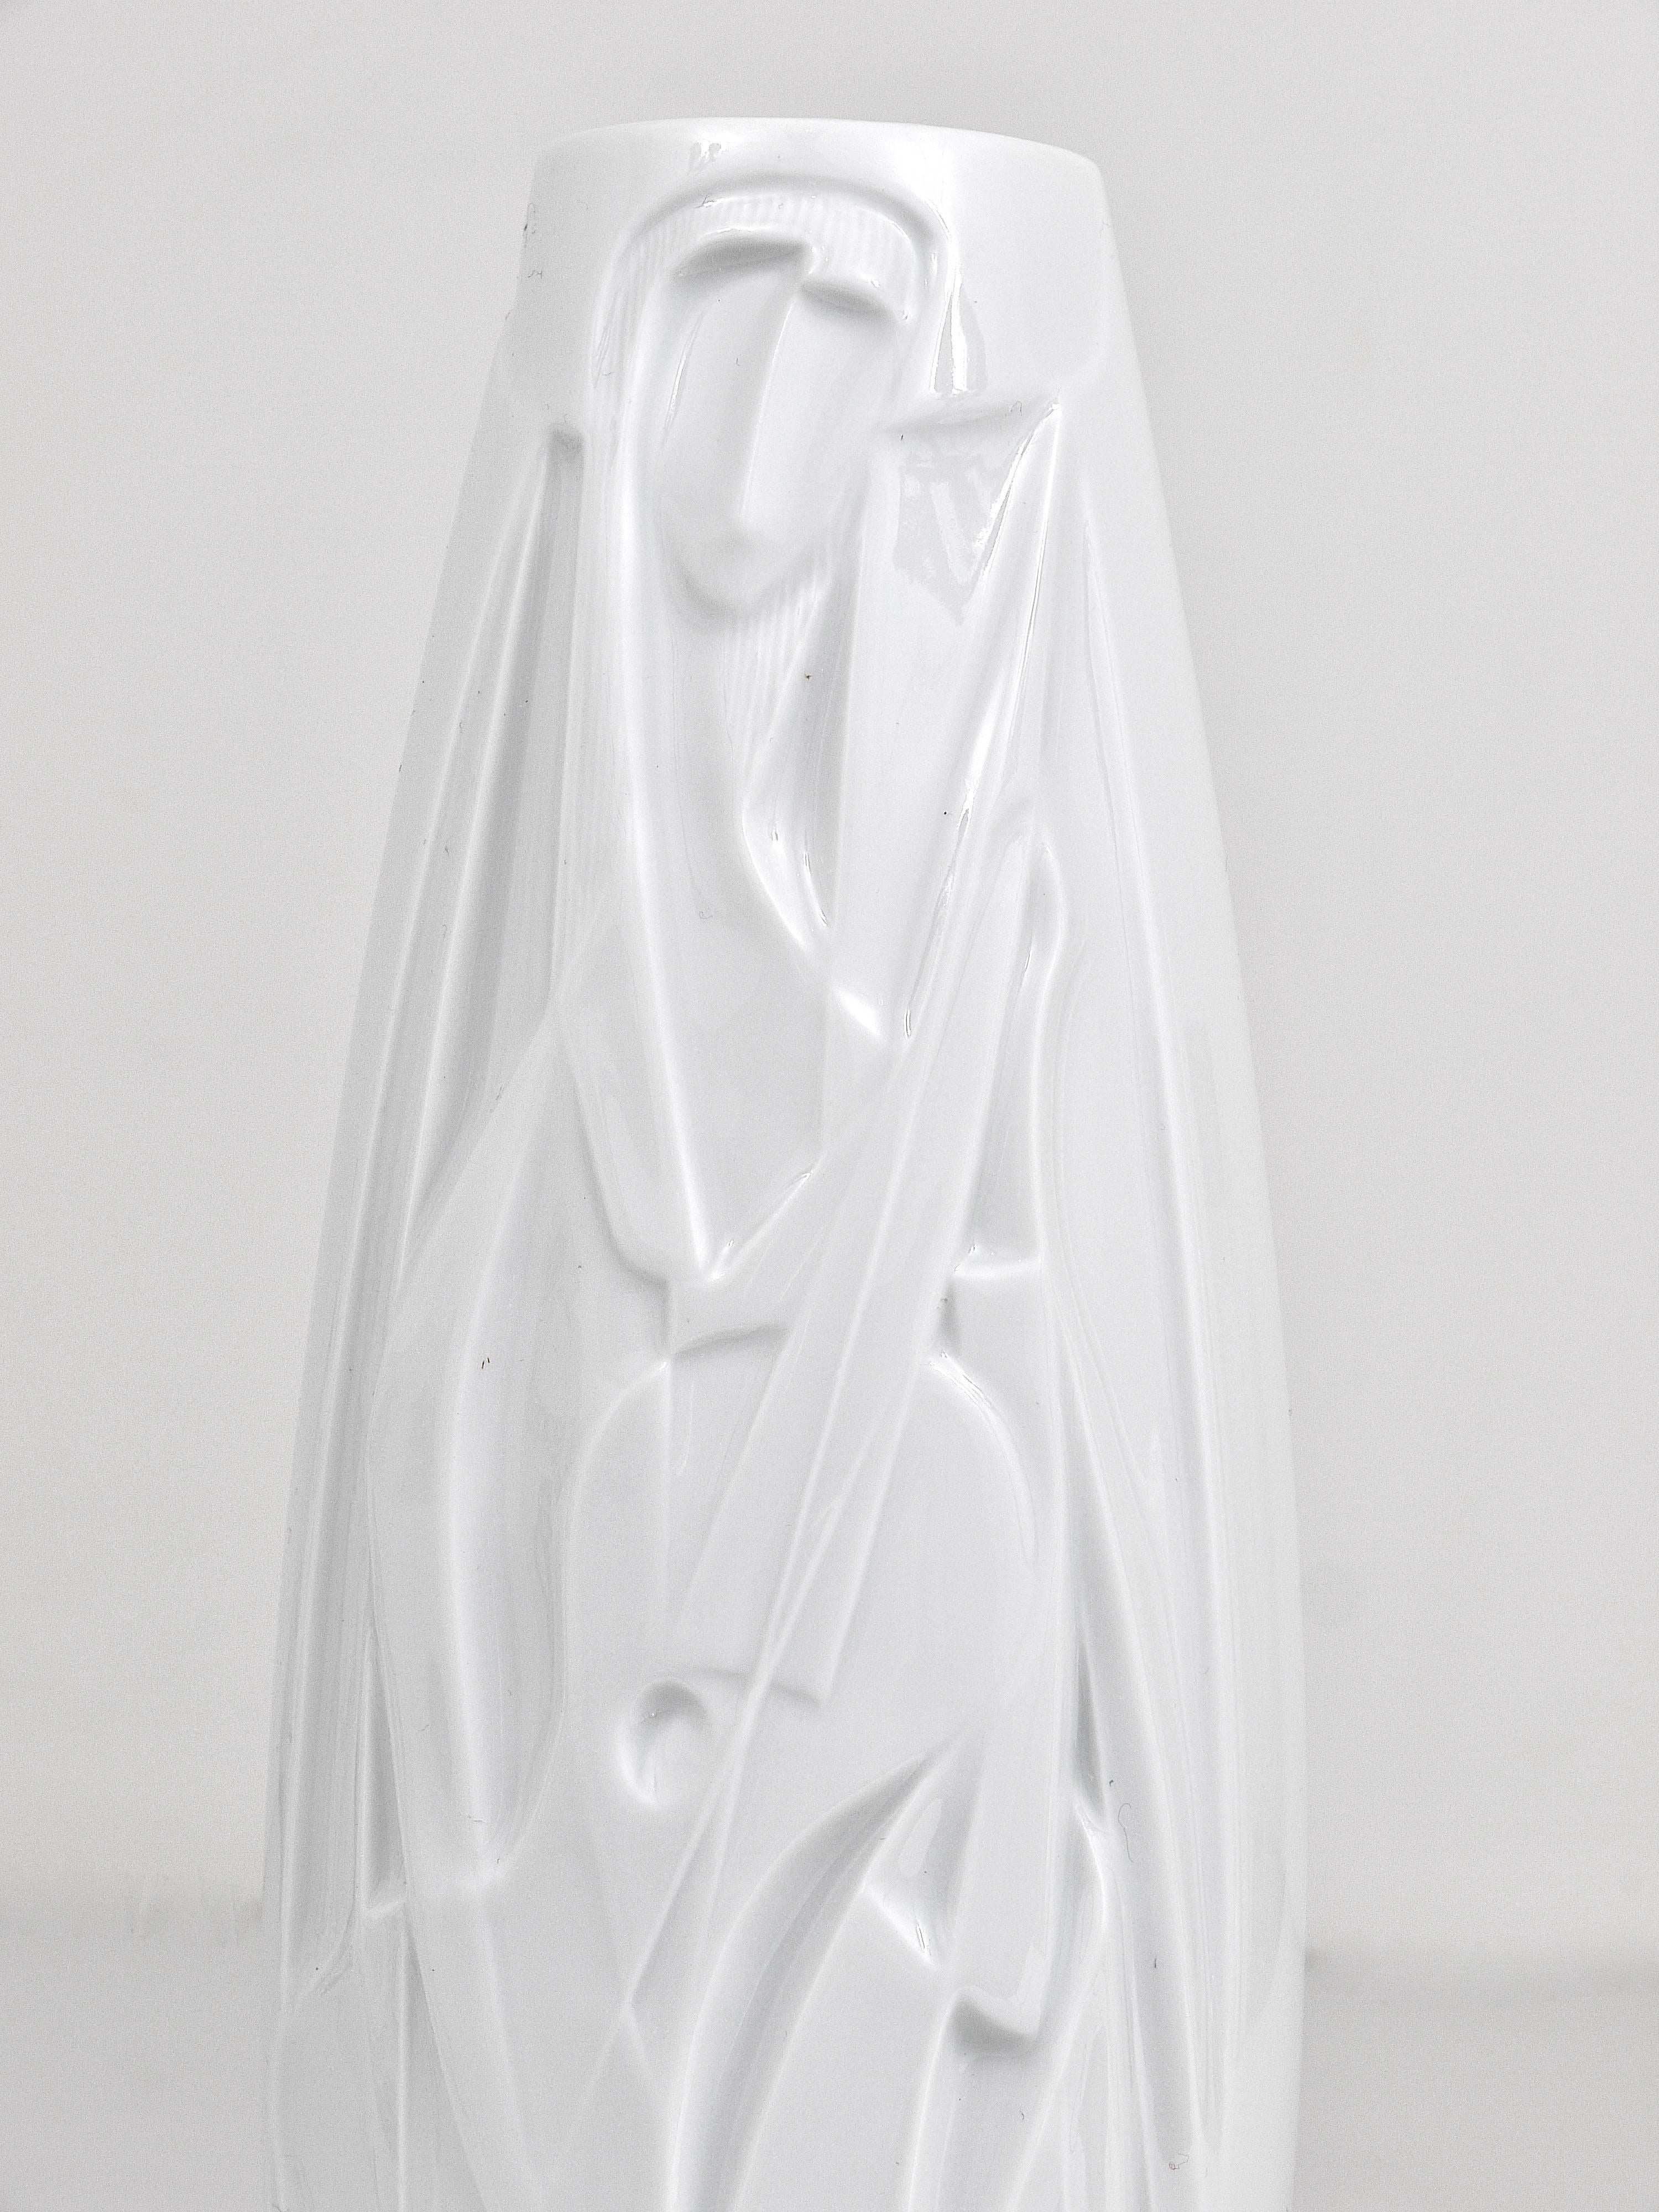 German White Relief Op Art Porcelain Vase, Cuno Fischer, Rosenthal Studio-Linie, 1960s For Sale